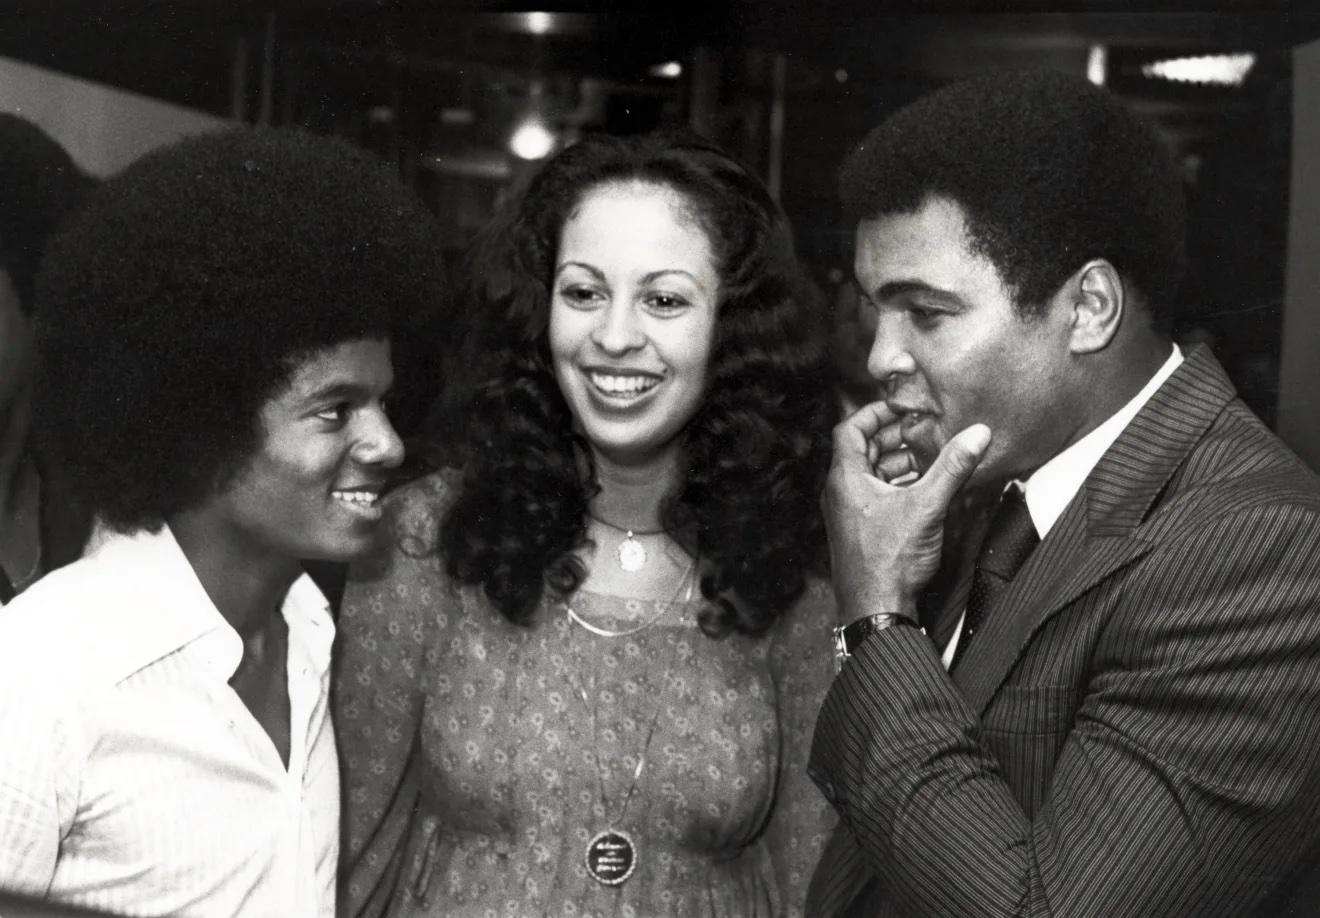 Ron Galella Black and White Photograph - RON GALELLA - Michael Jackson &Muhammad Ali and wife, Veronica Parker Ali 1977